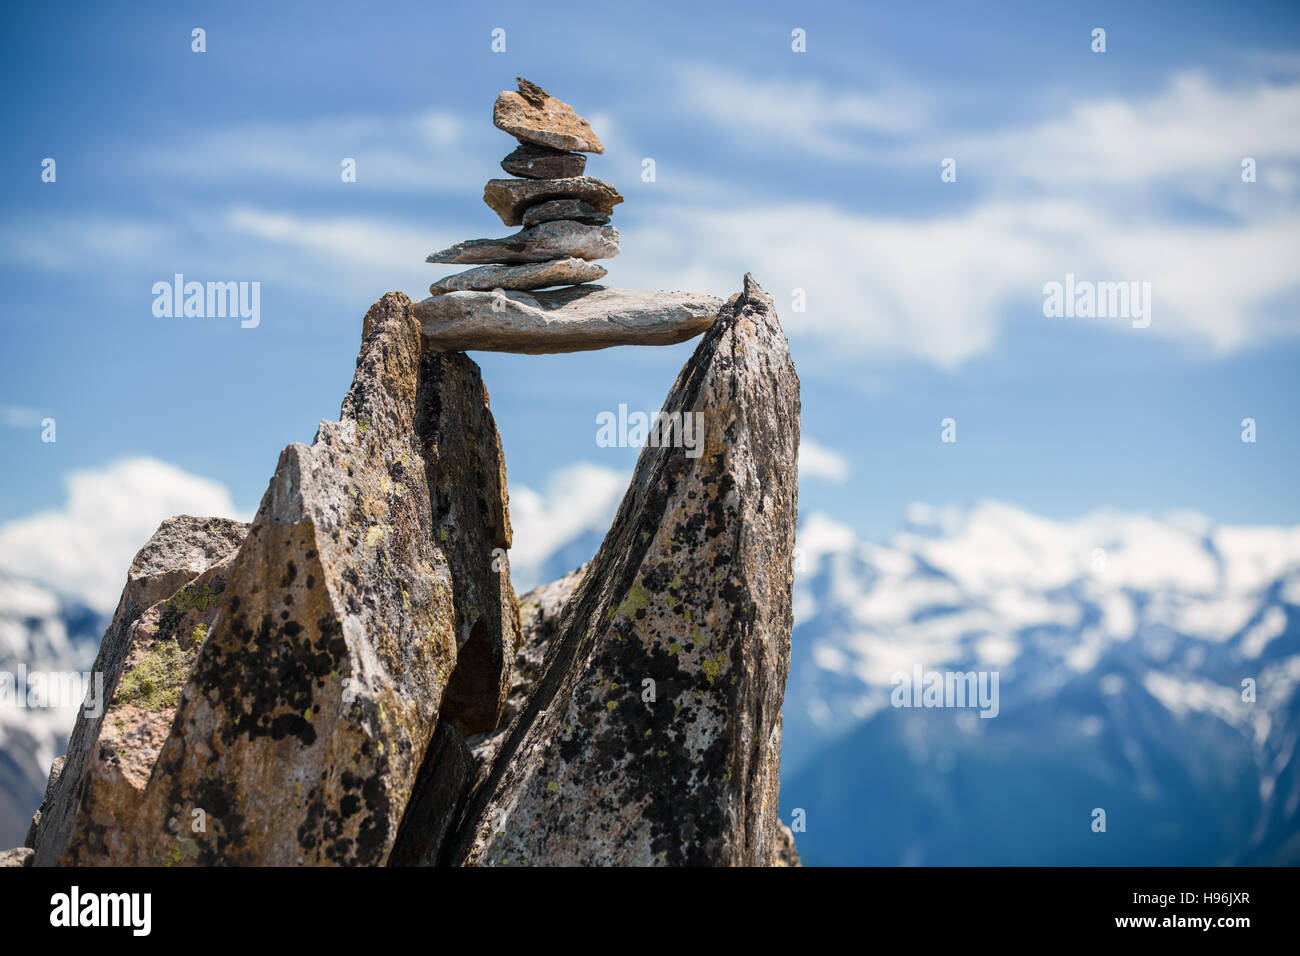 Stones cairn bridging gap near Eggishorn peak, Alps, Switzerland Stock Photo